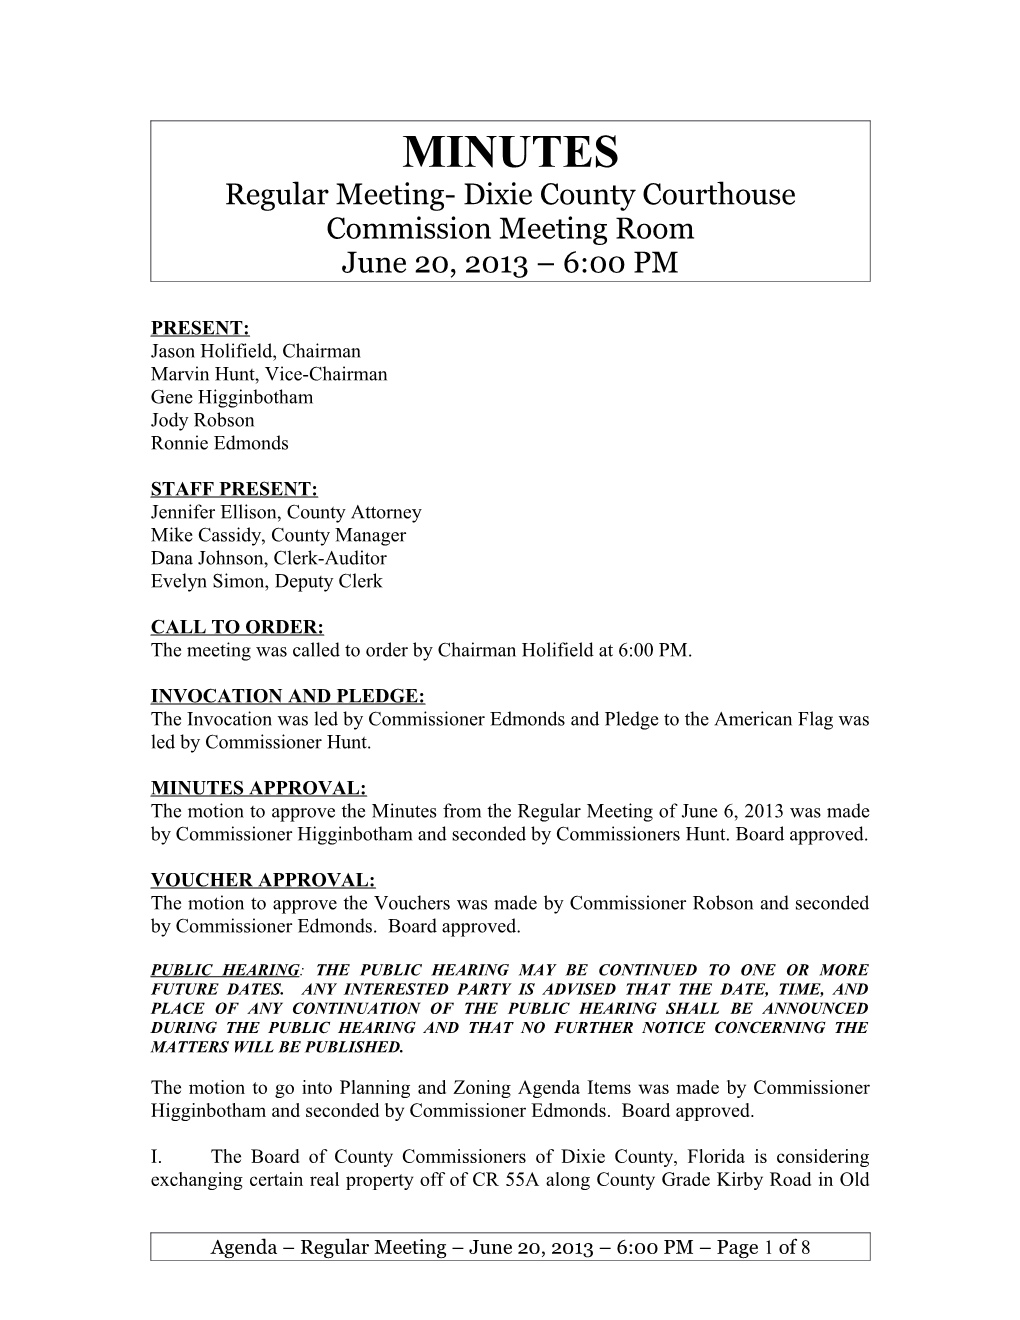 Regularmeeting-Dixiecounty Courthouse